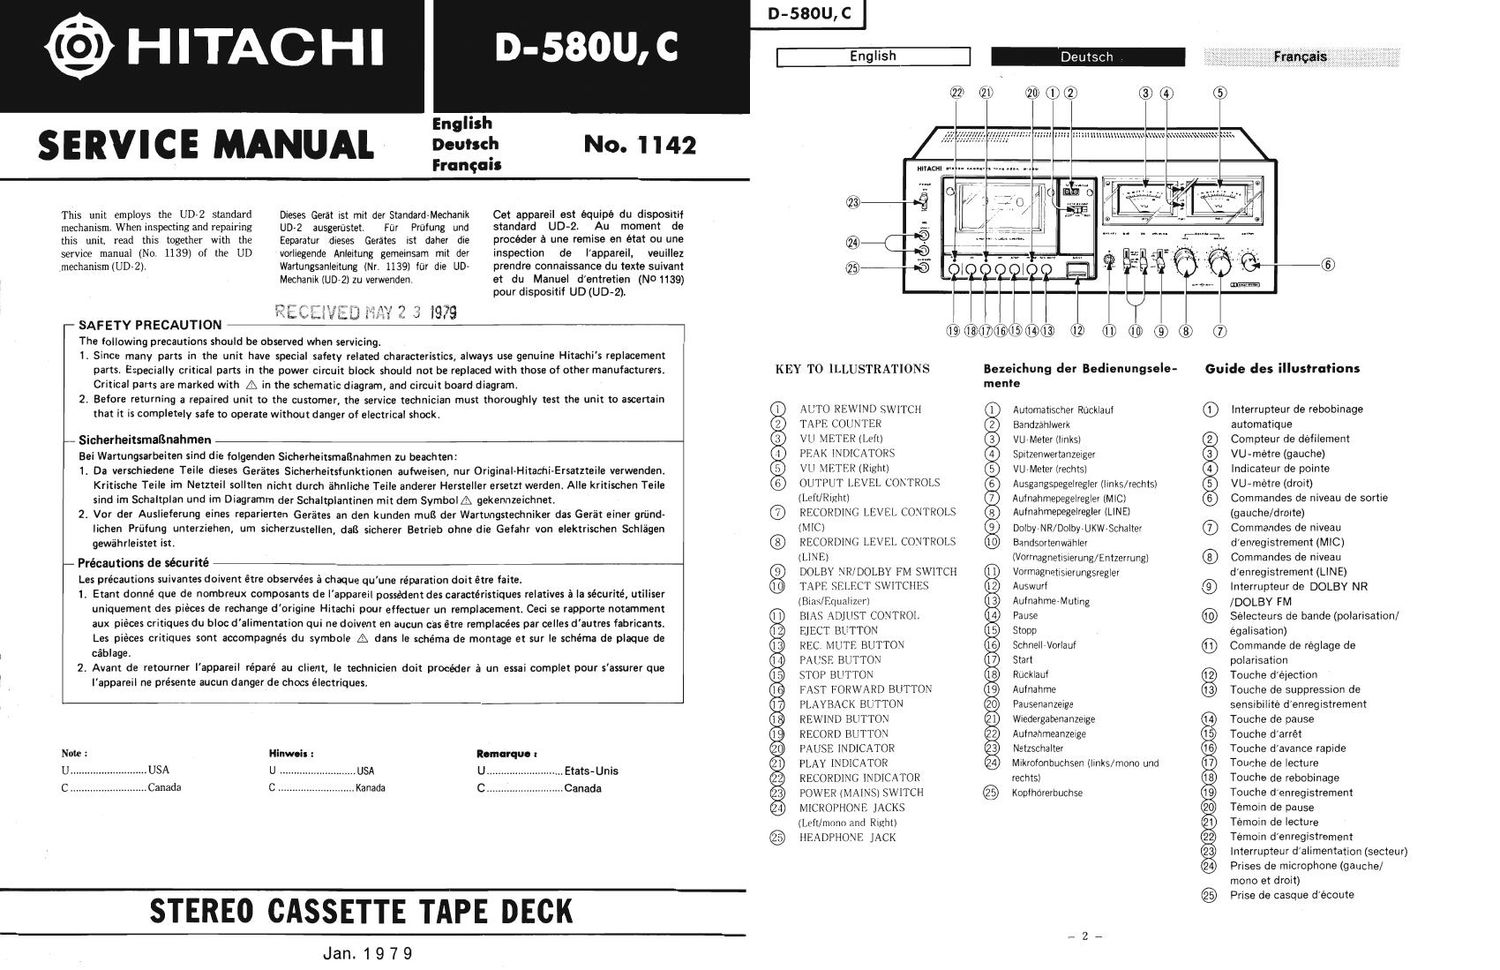 Hitachi D 580 C Service Manual